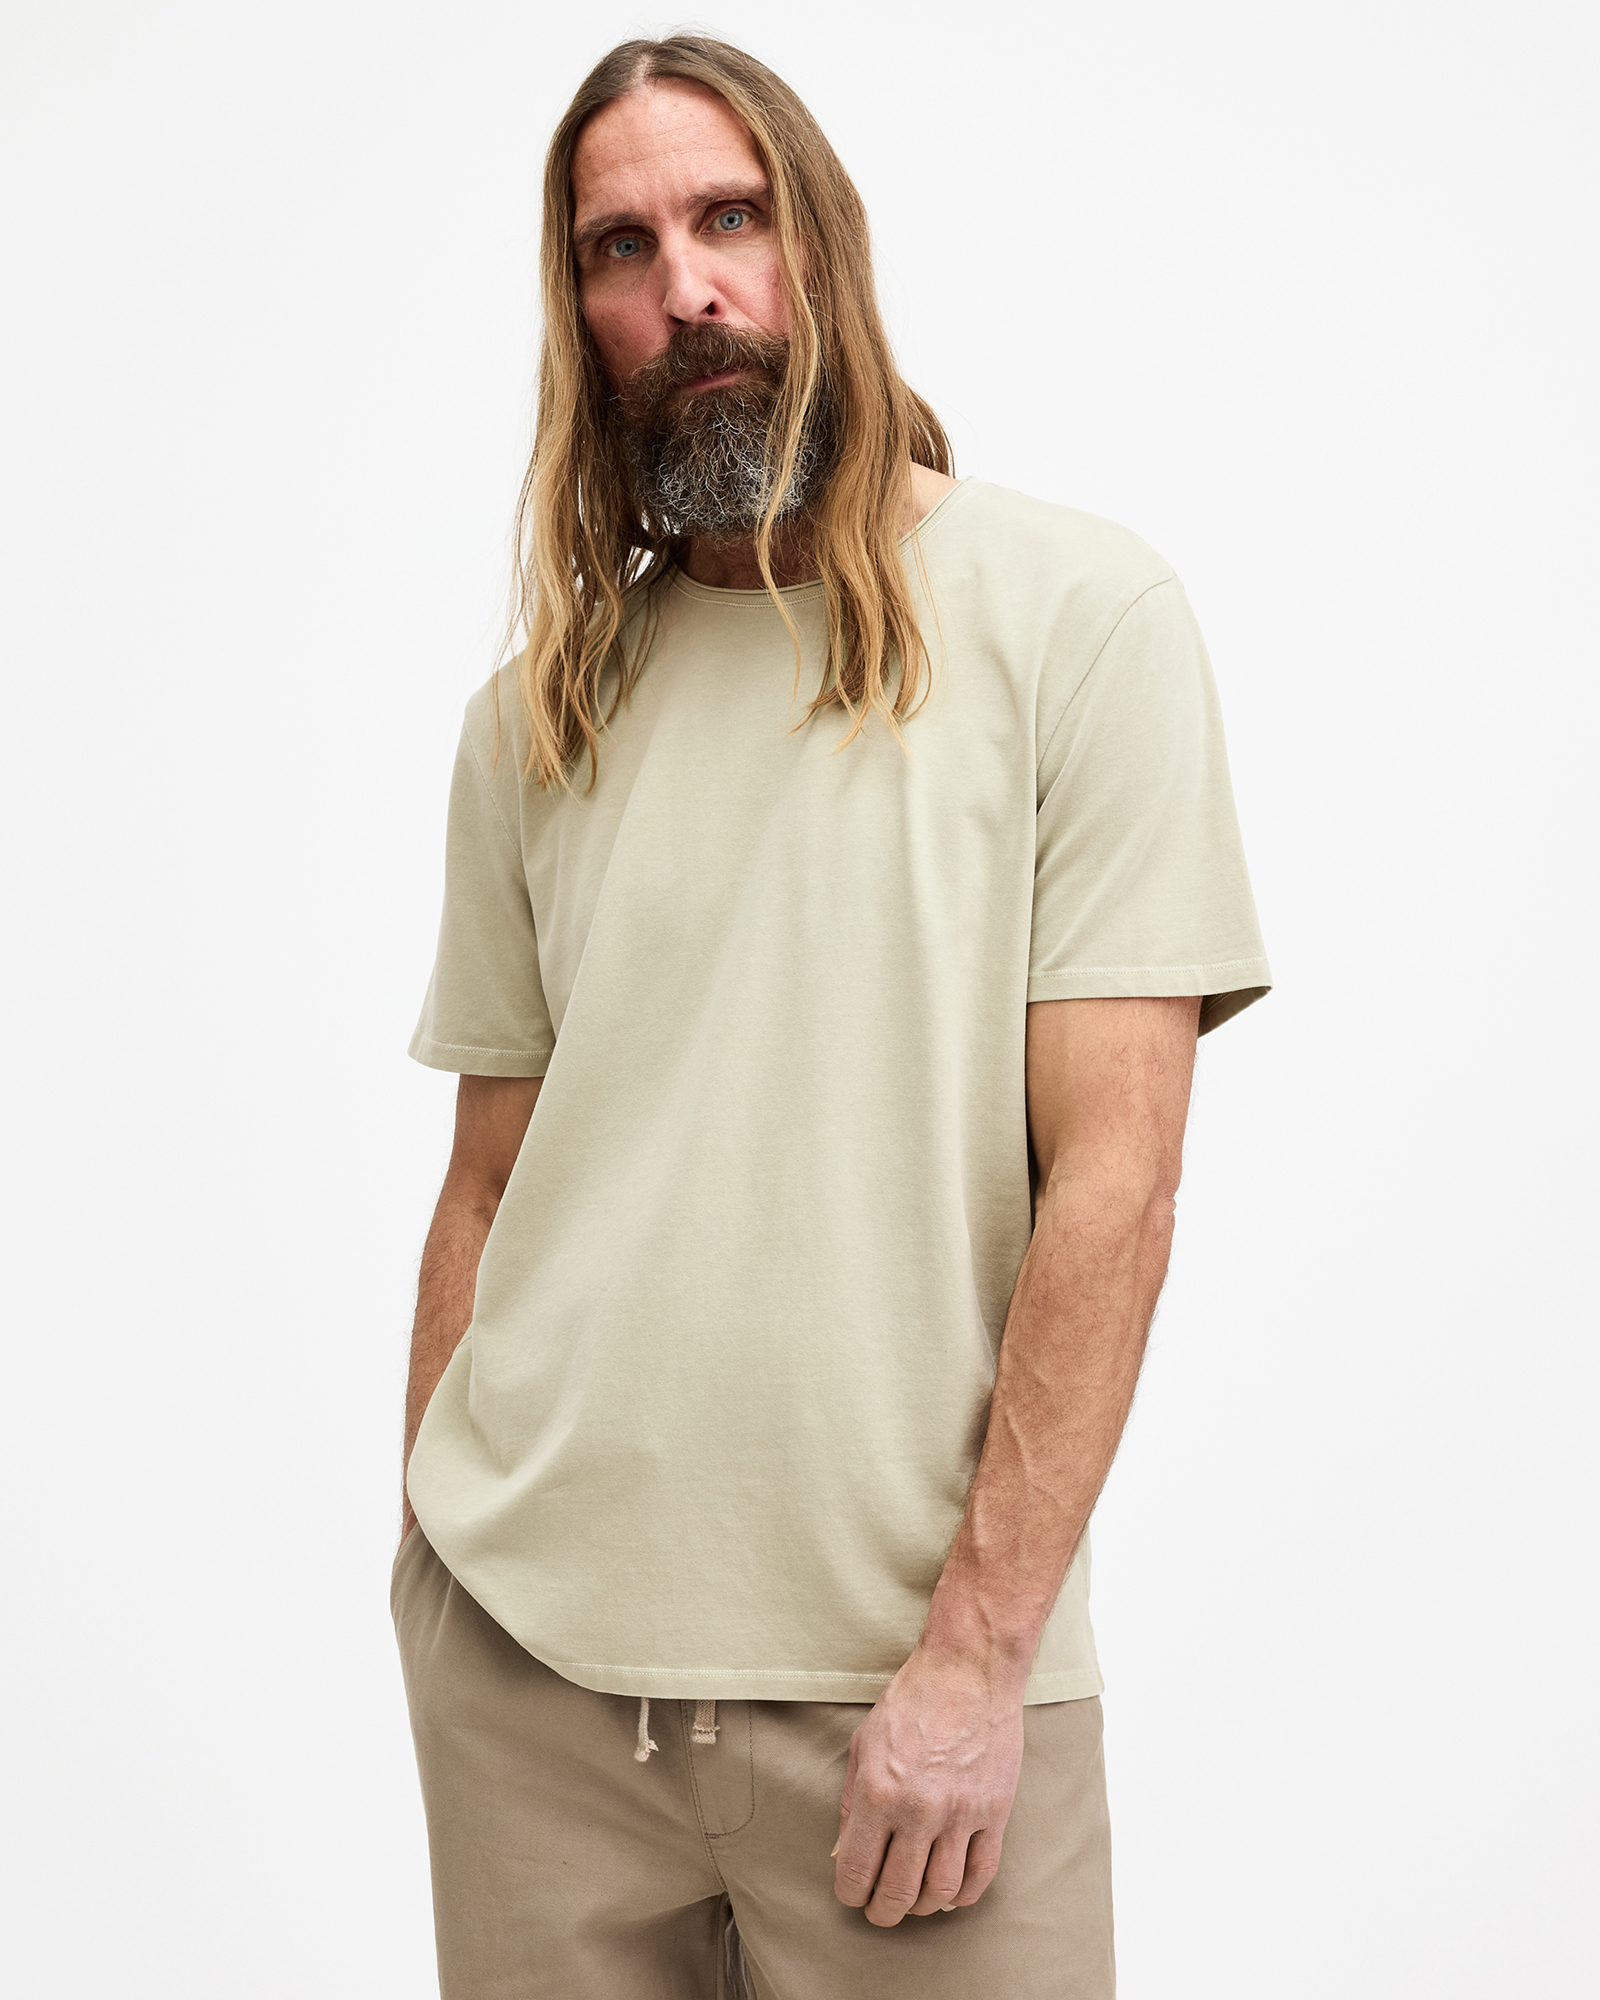 AllSaints Bodega Crew Neck Raw Edge T-Shirt,, HERB GREEN, Size: